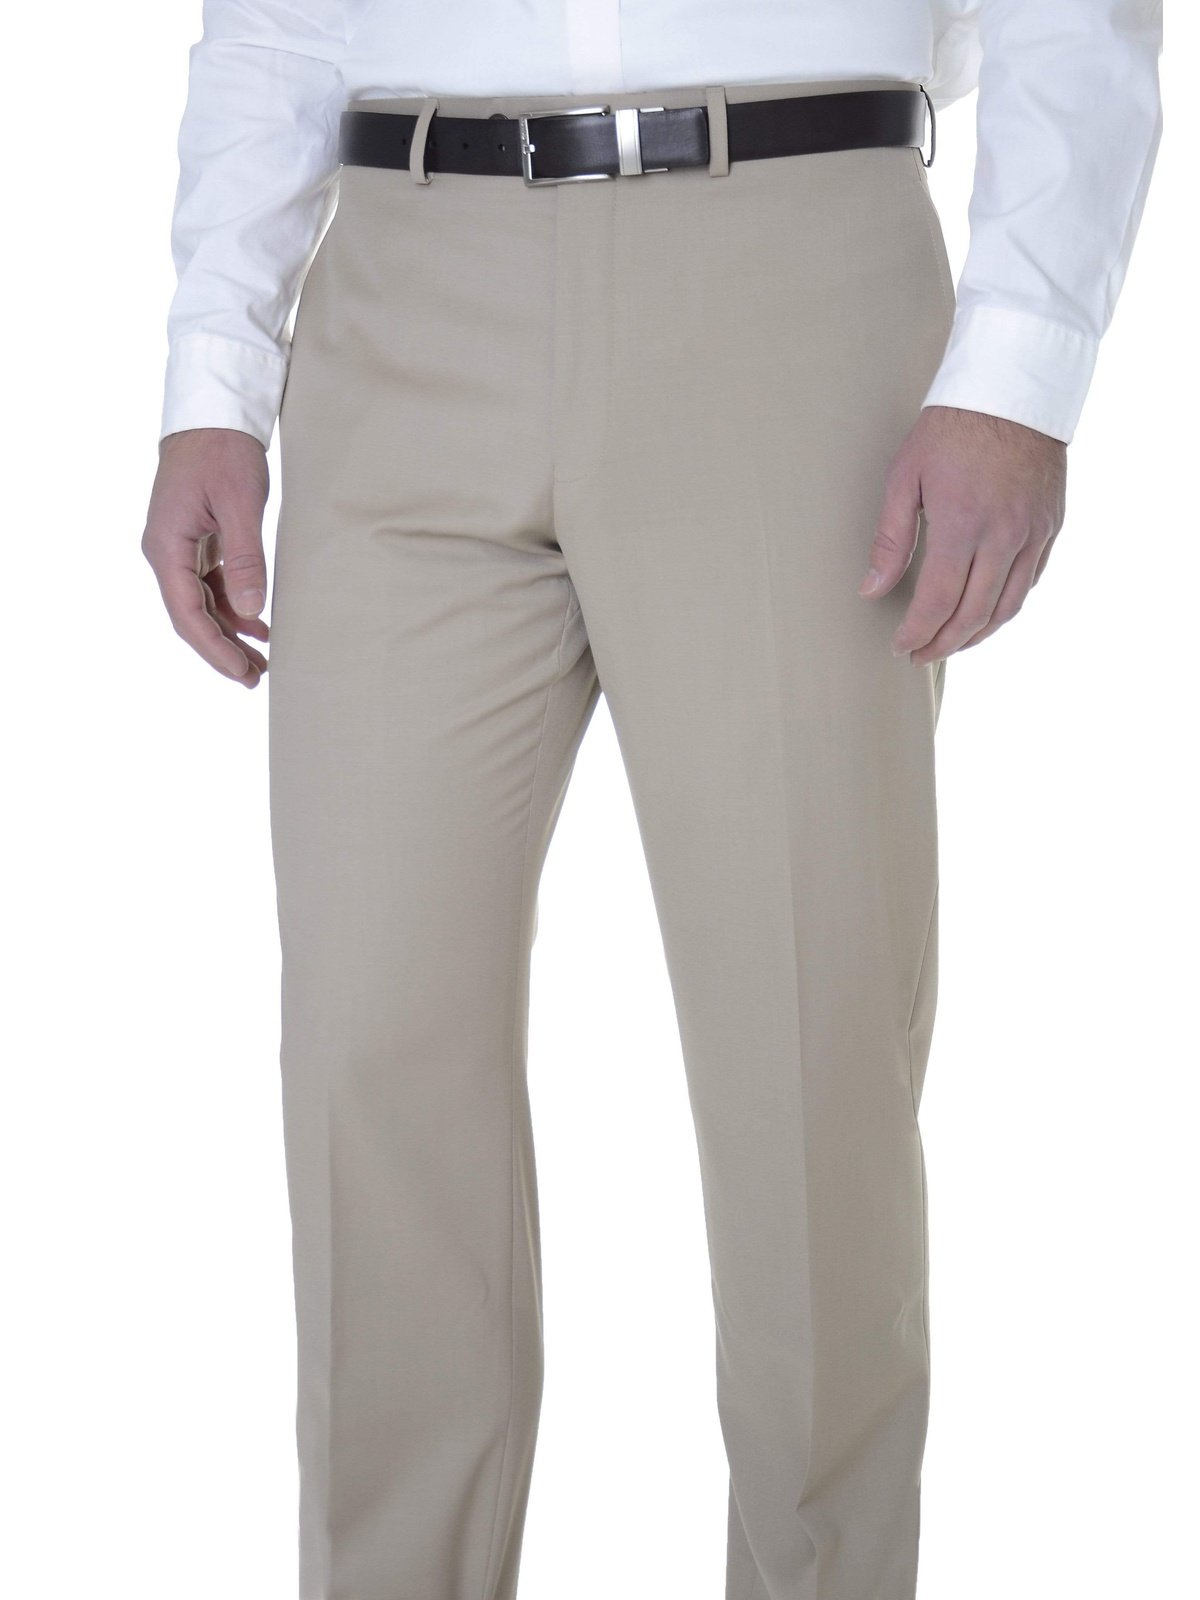 Calvin Klein PANTS 38X34 Calvin Klein Mens Regular Fit Solid Taupe Tan Flat Front Dress Pants